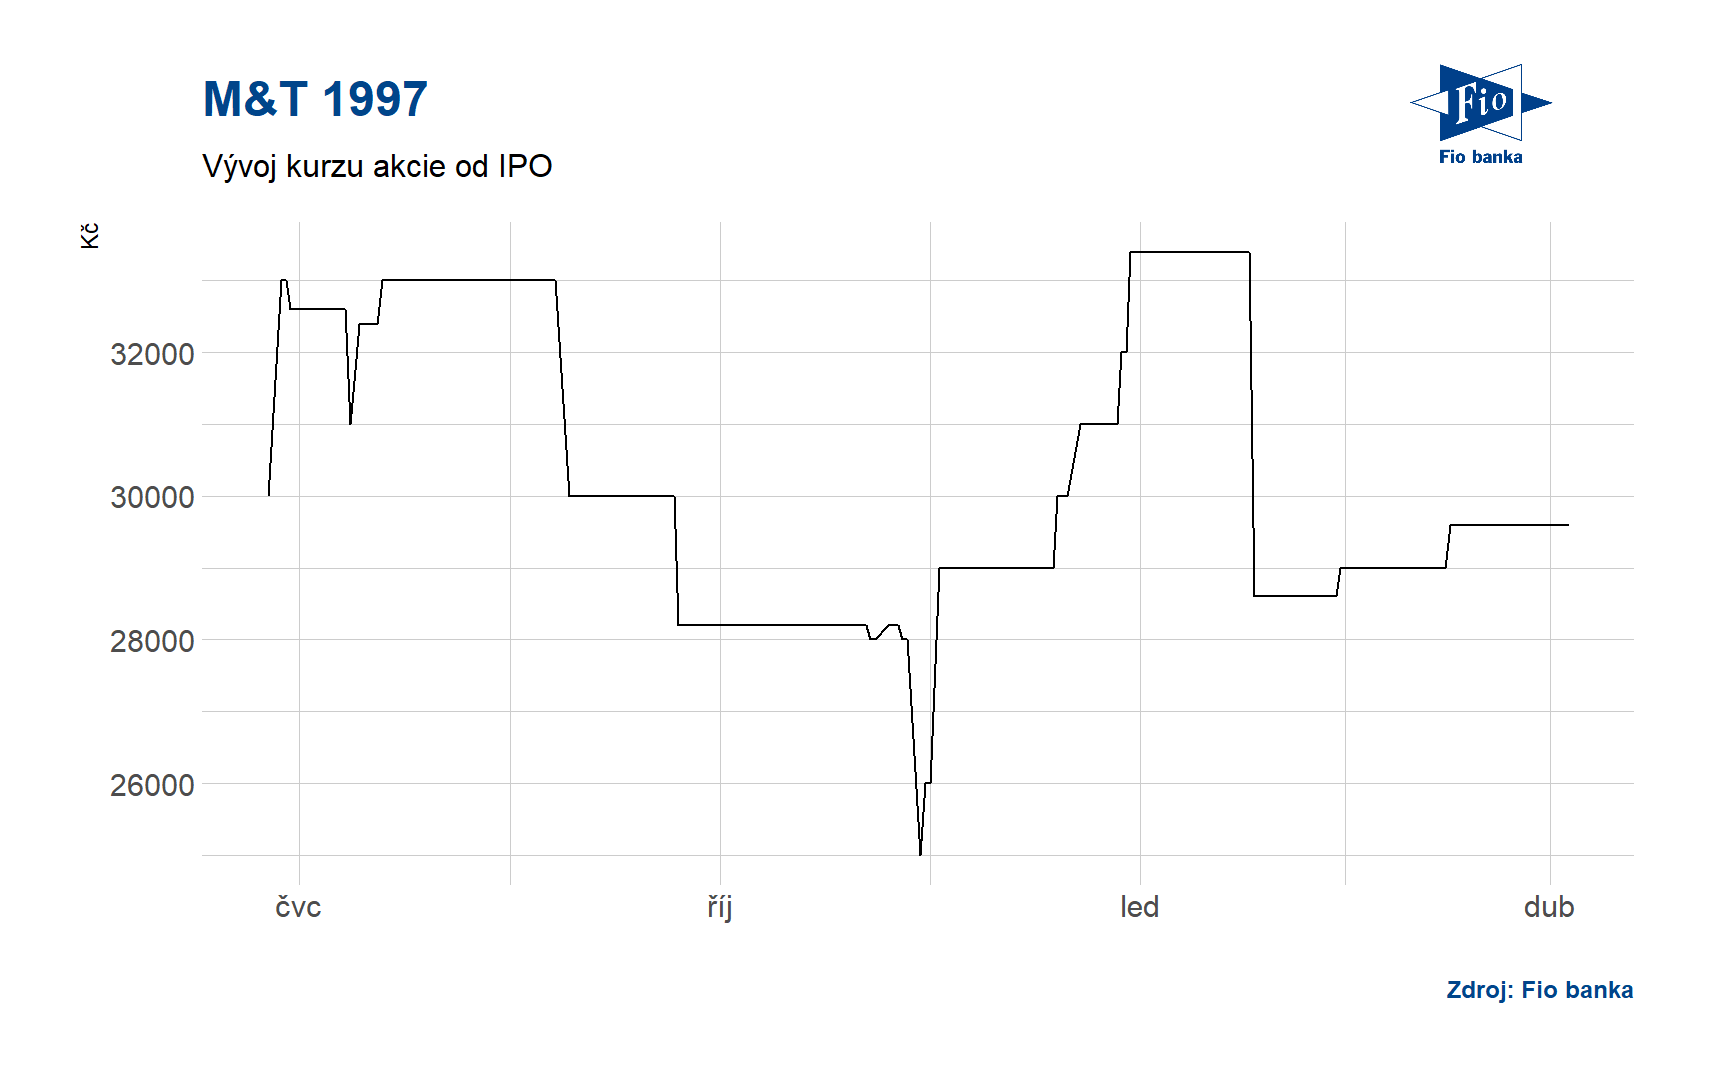 Vývoj kurzu akcie M&T 1997 od IPO